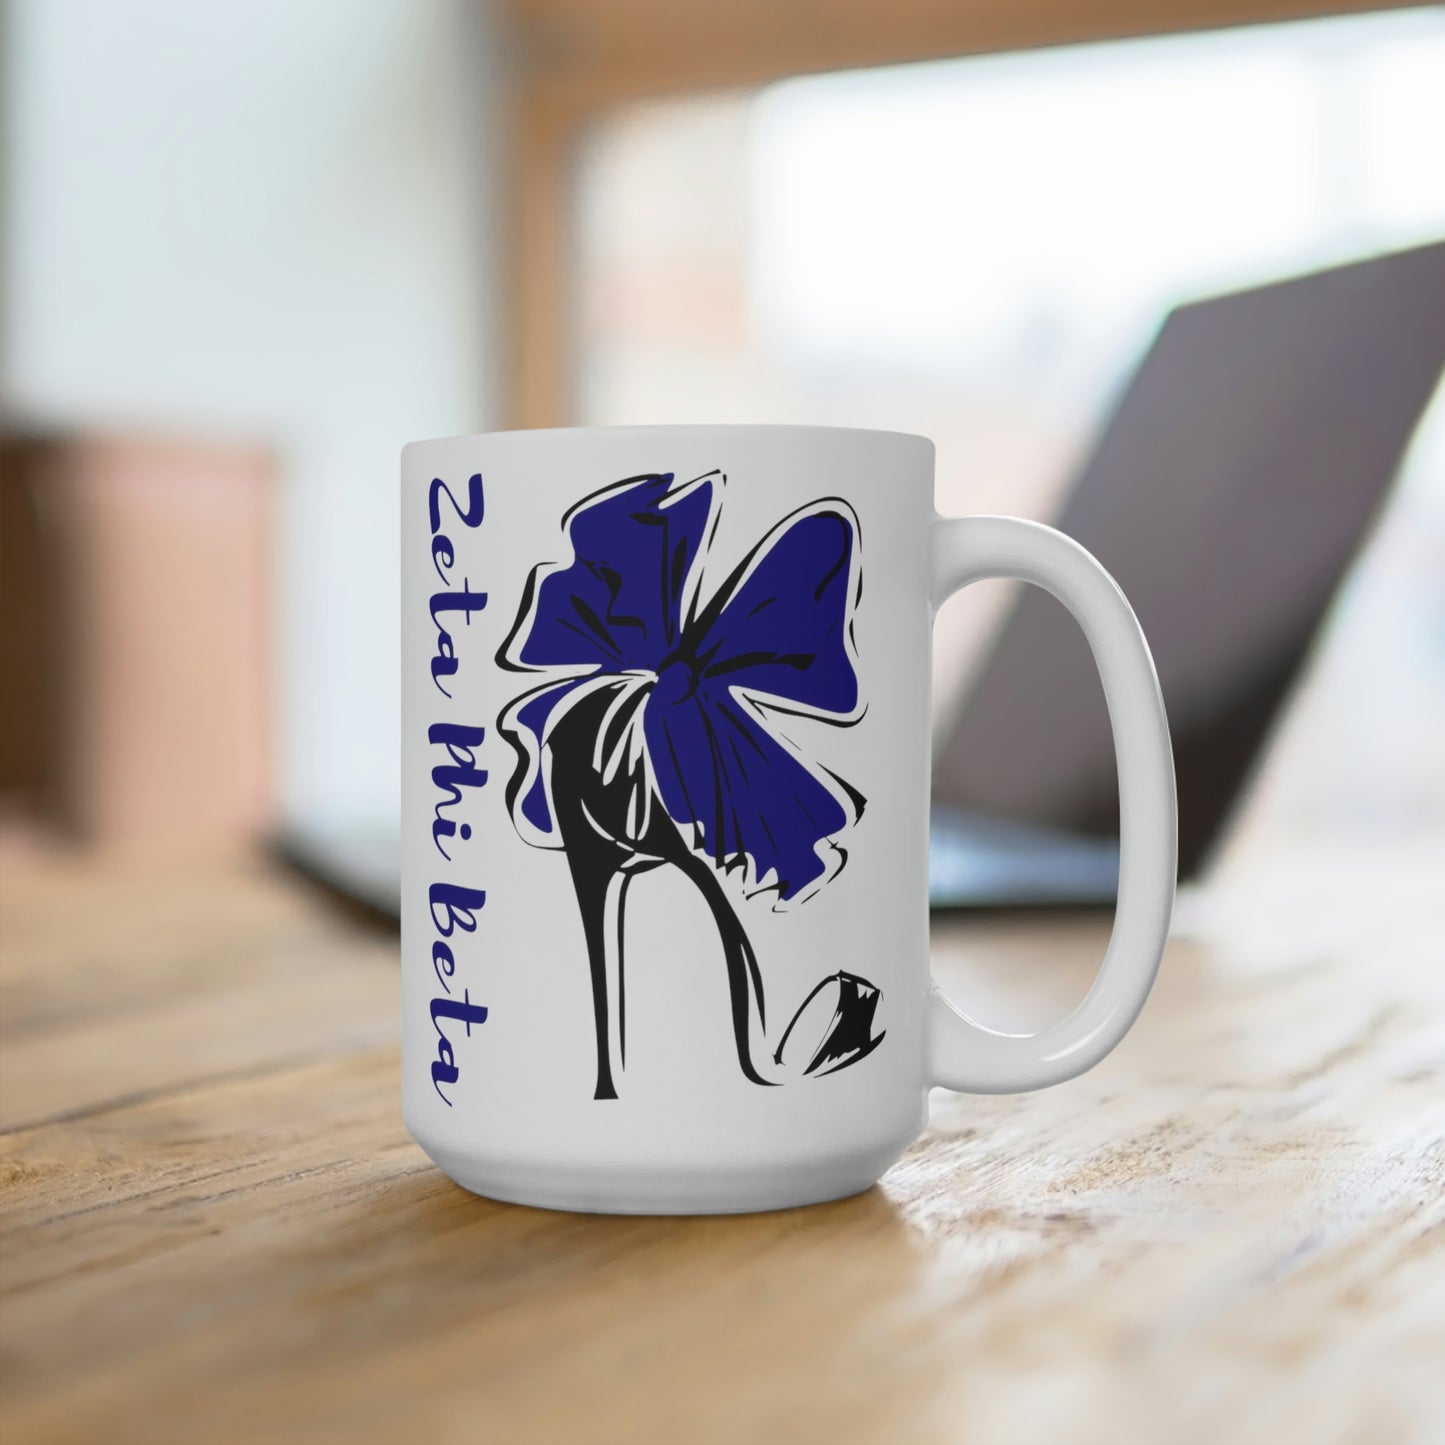 Zeta Phi Beta (High Heel) Ceramic Mug